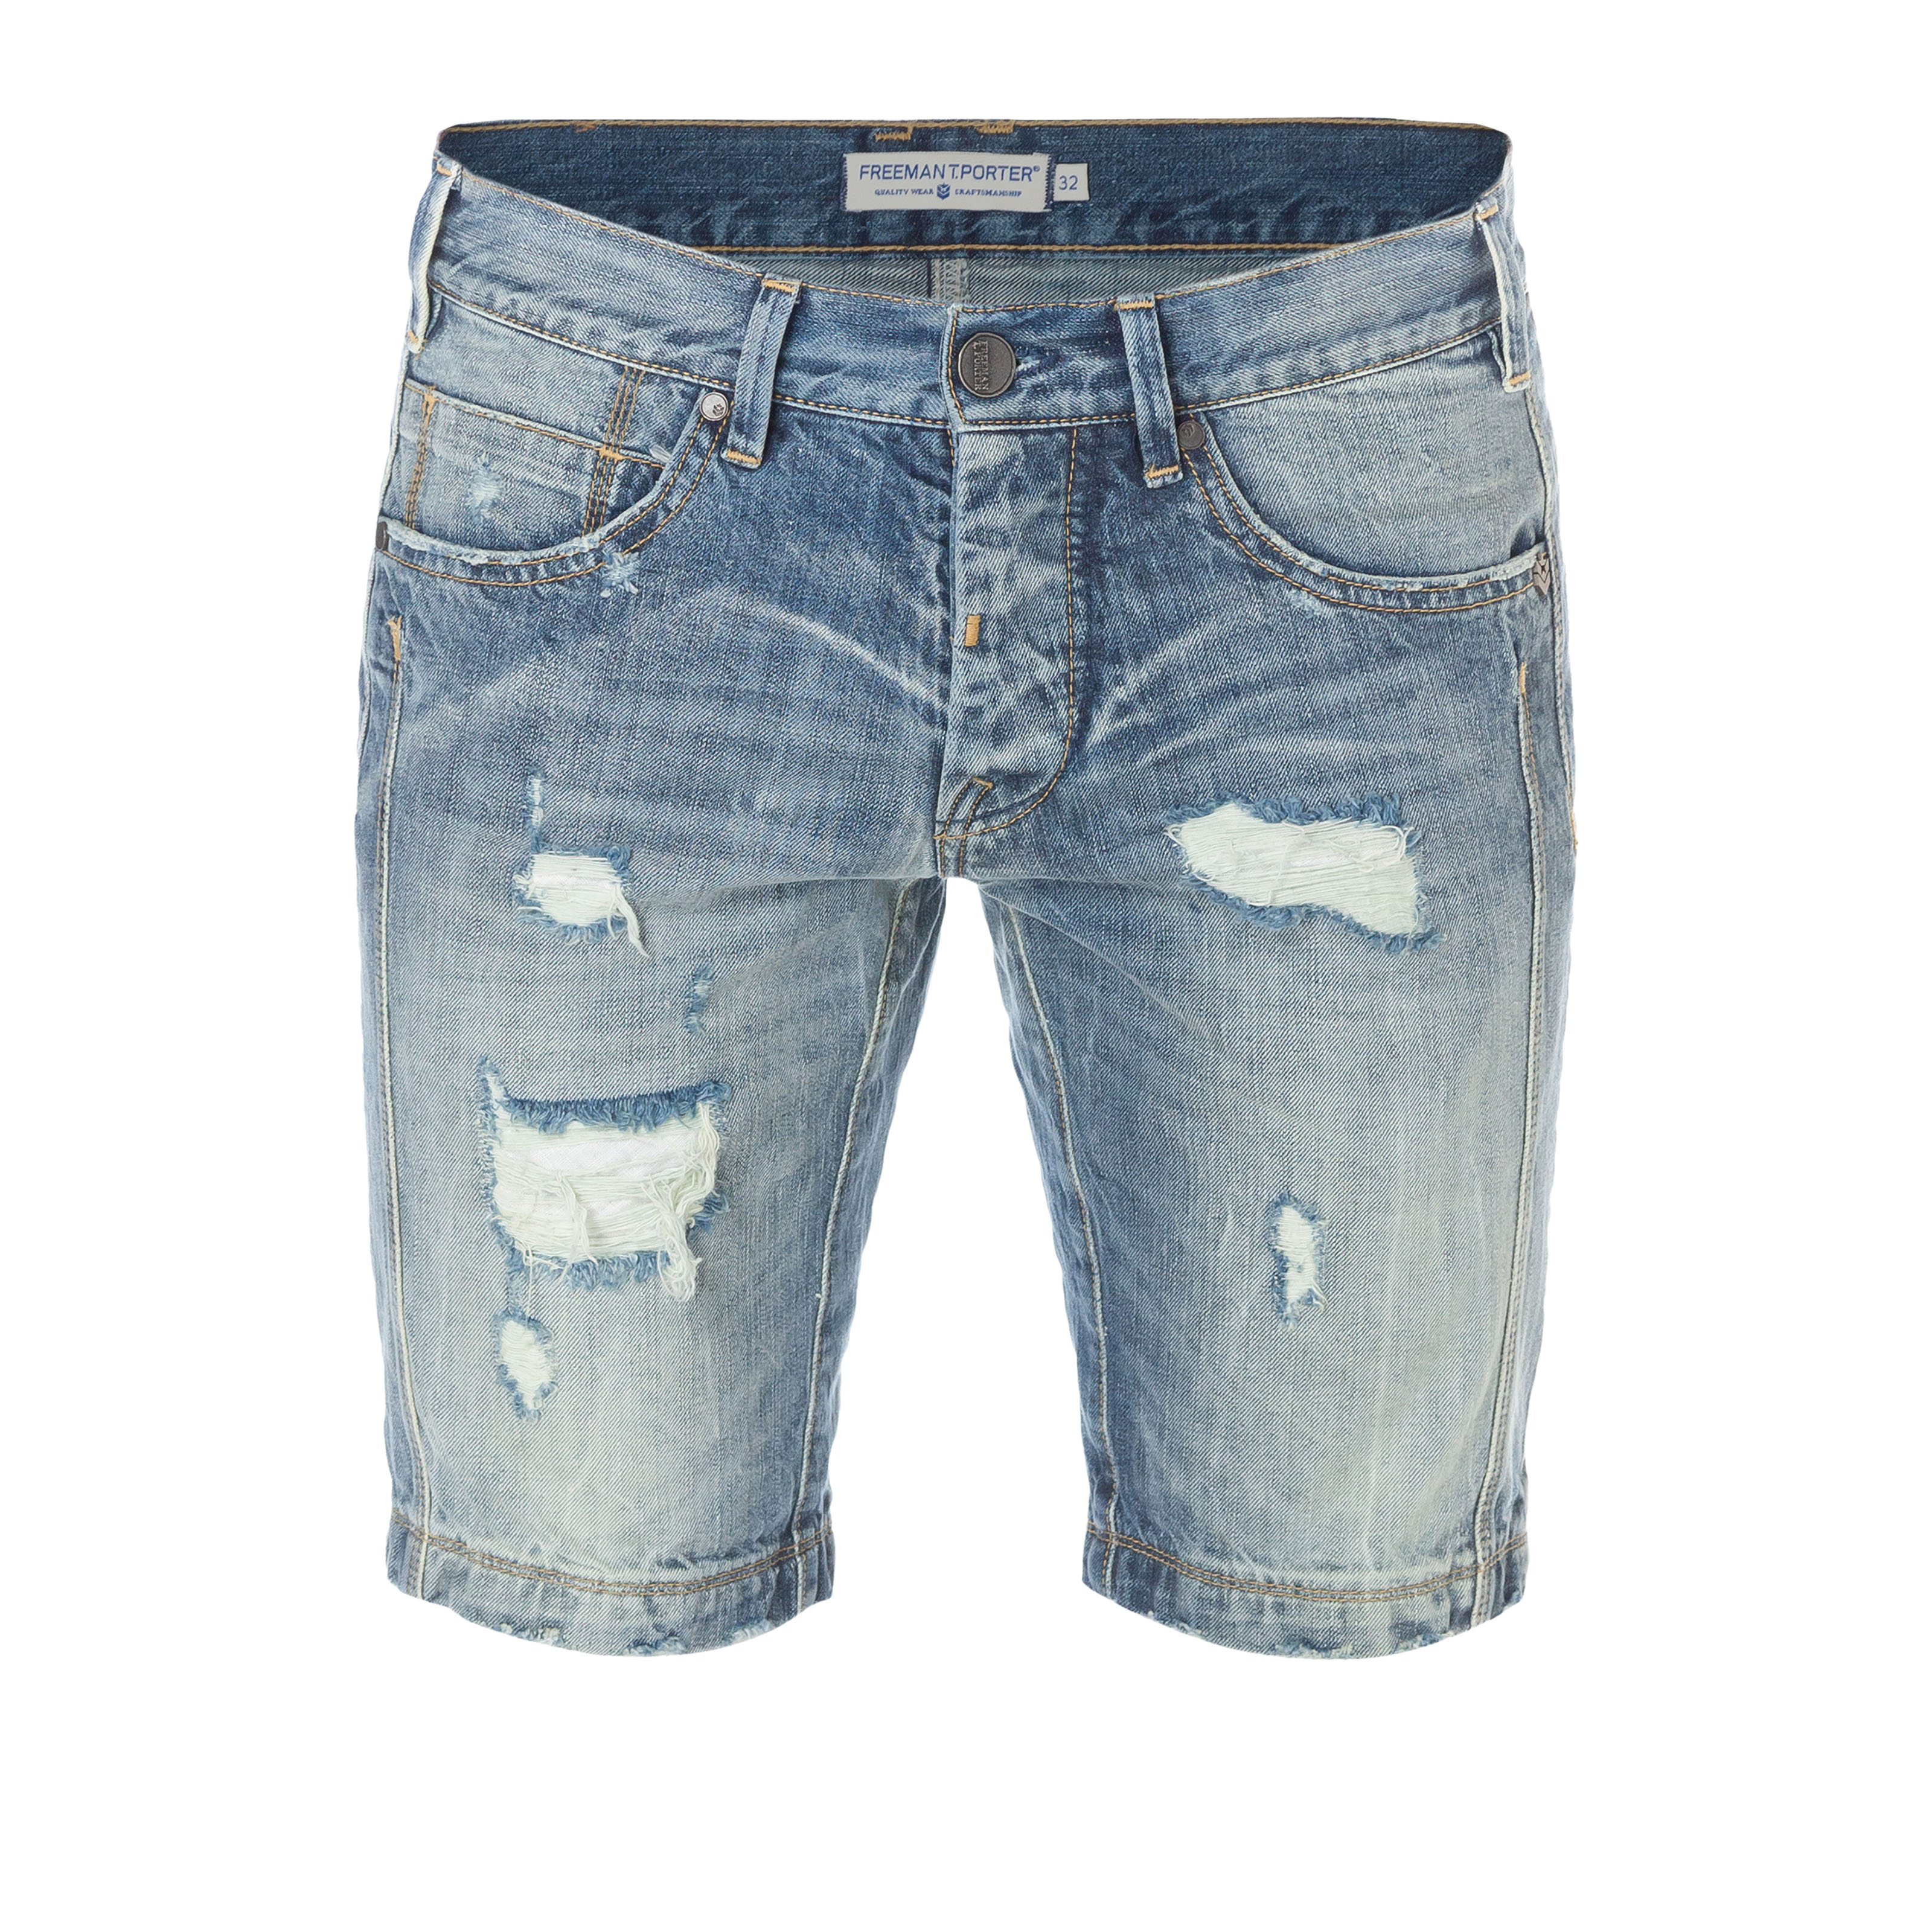 Freeman T. Porter Jeans-Shorts passend zum neuen Love, Peace and Festivals-Style